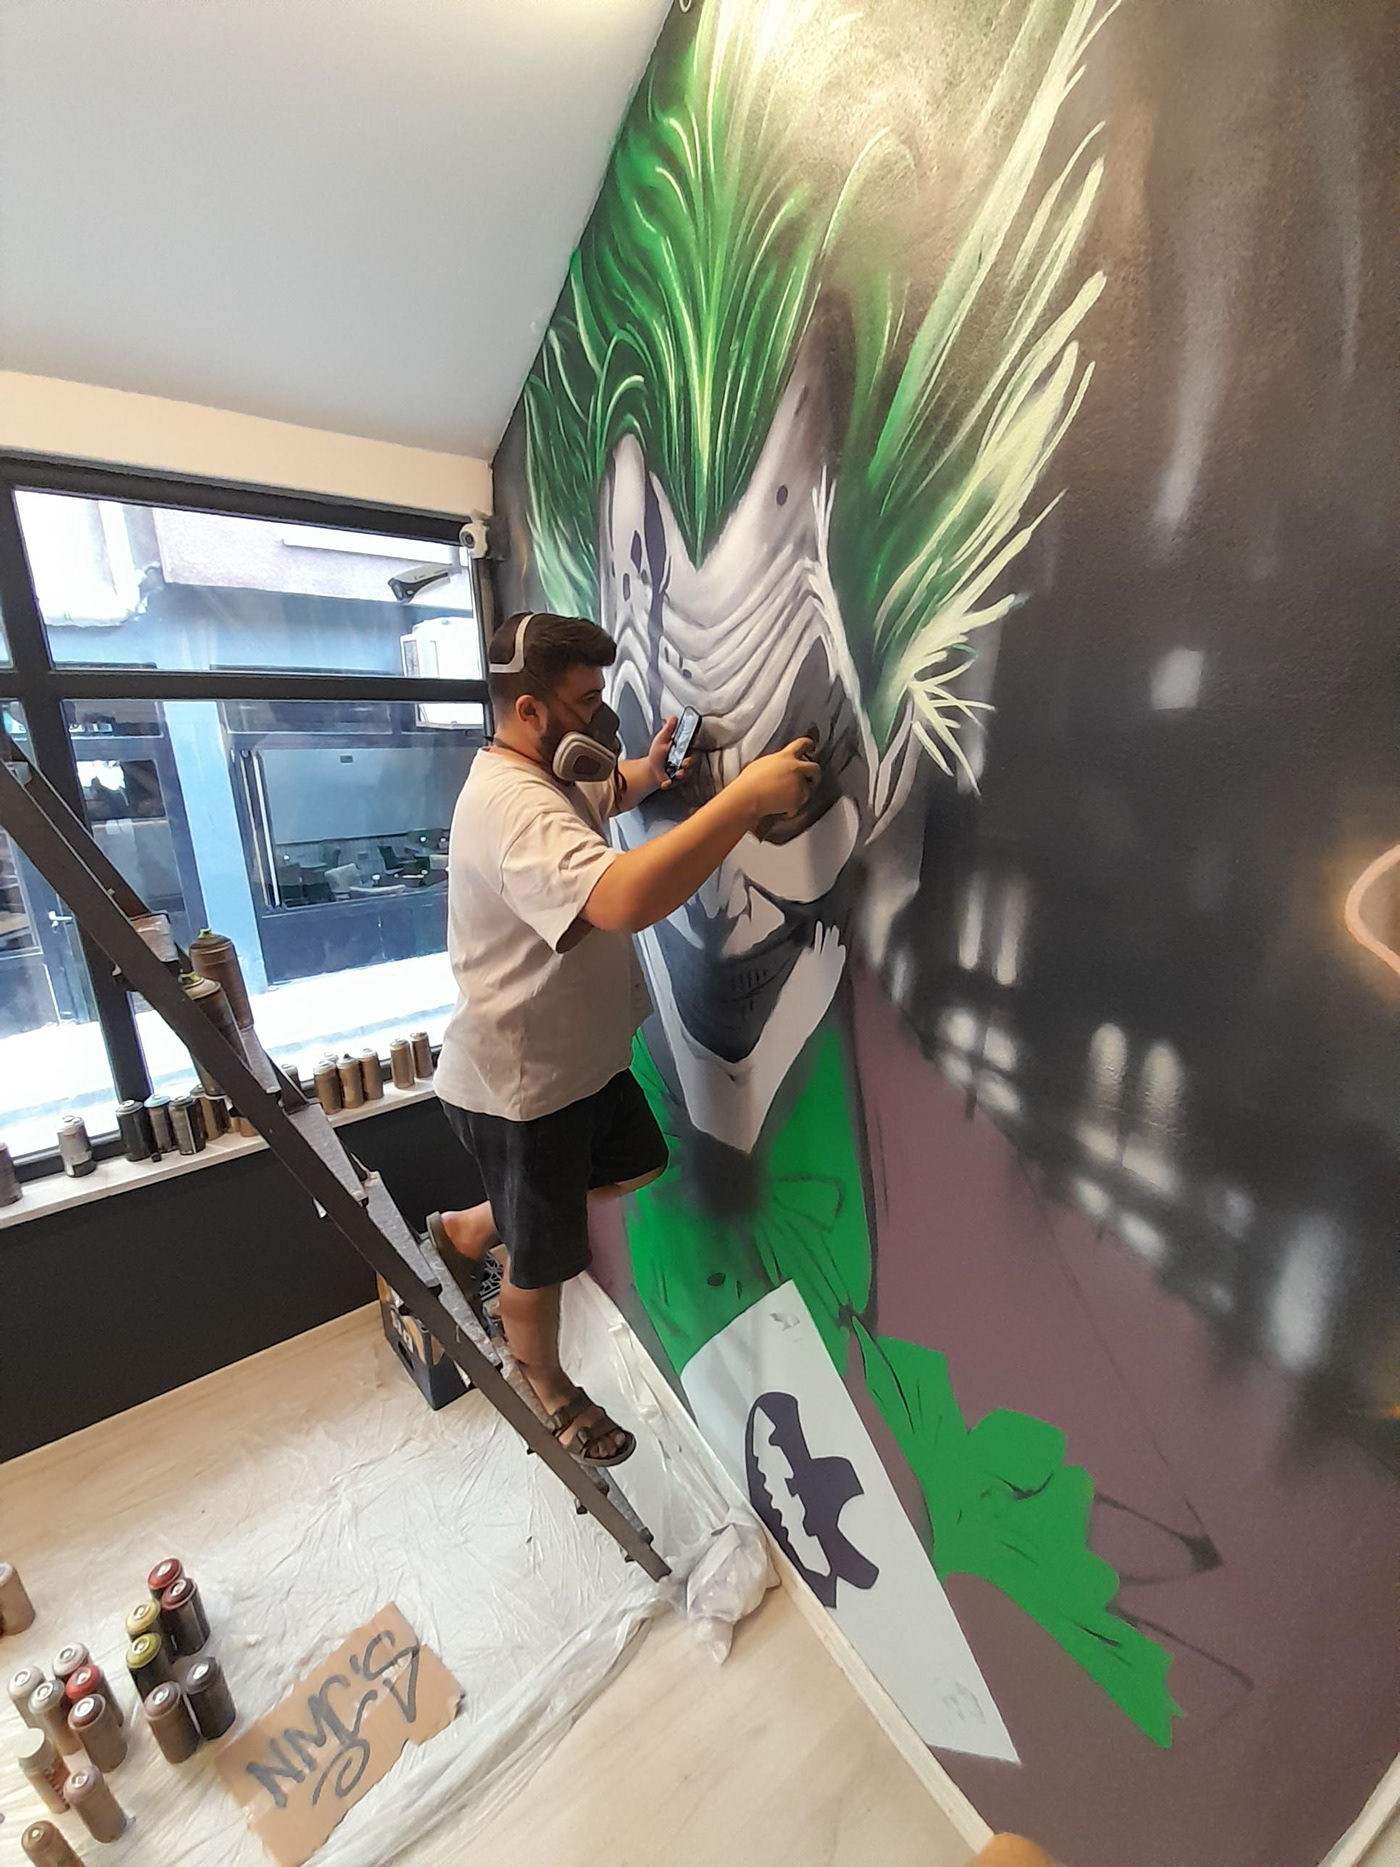 joker batman Mural duvar resmi Graffiti mural art painting   ankara çankırı Joker graffiti